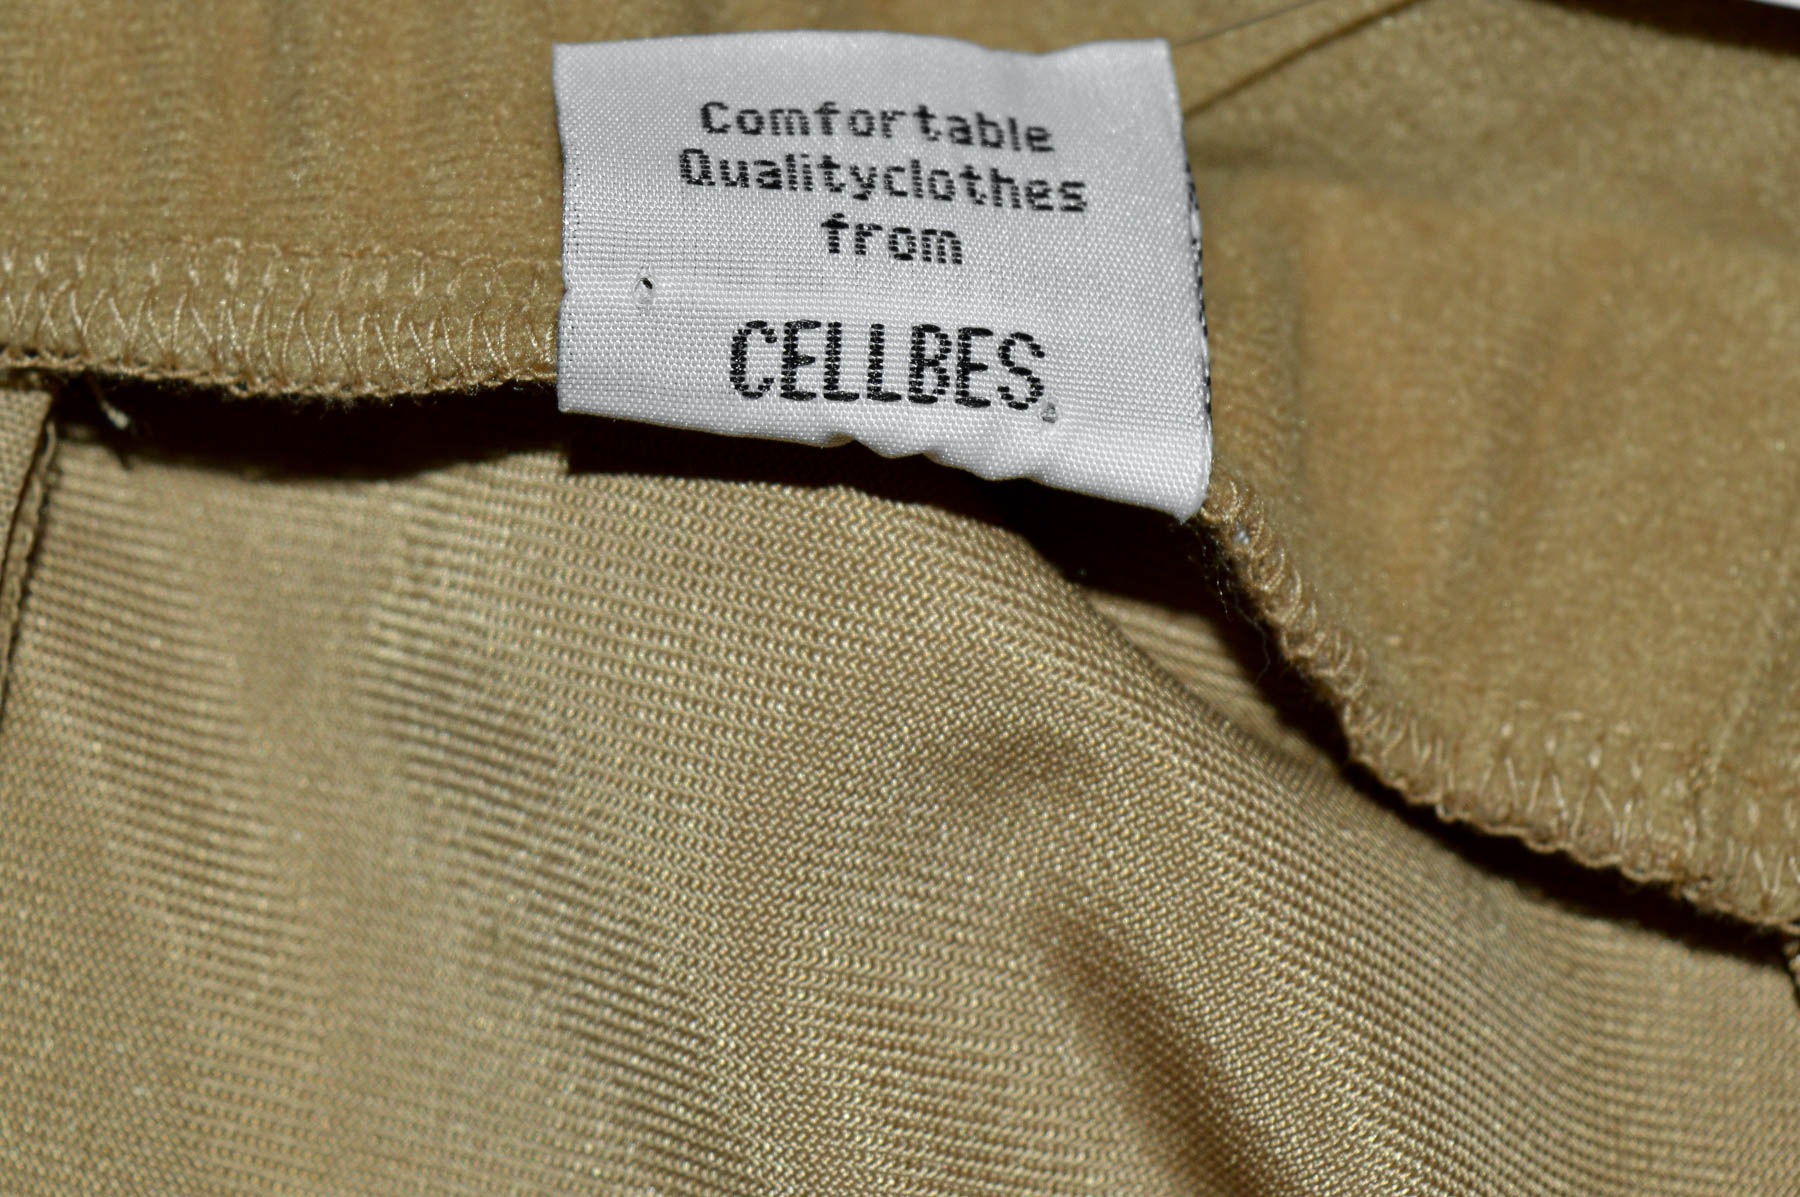 Skirt - CELLBES - 2